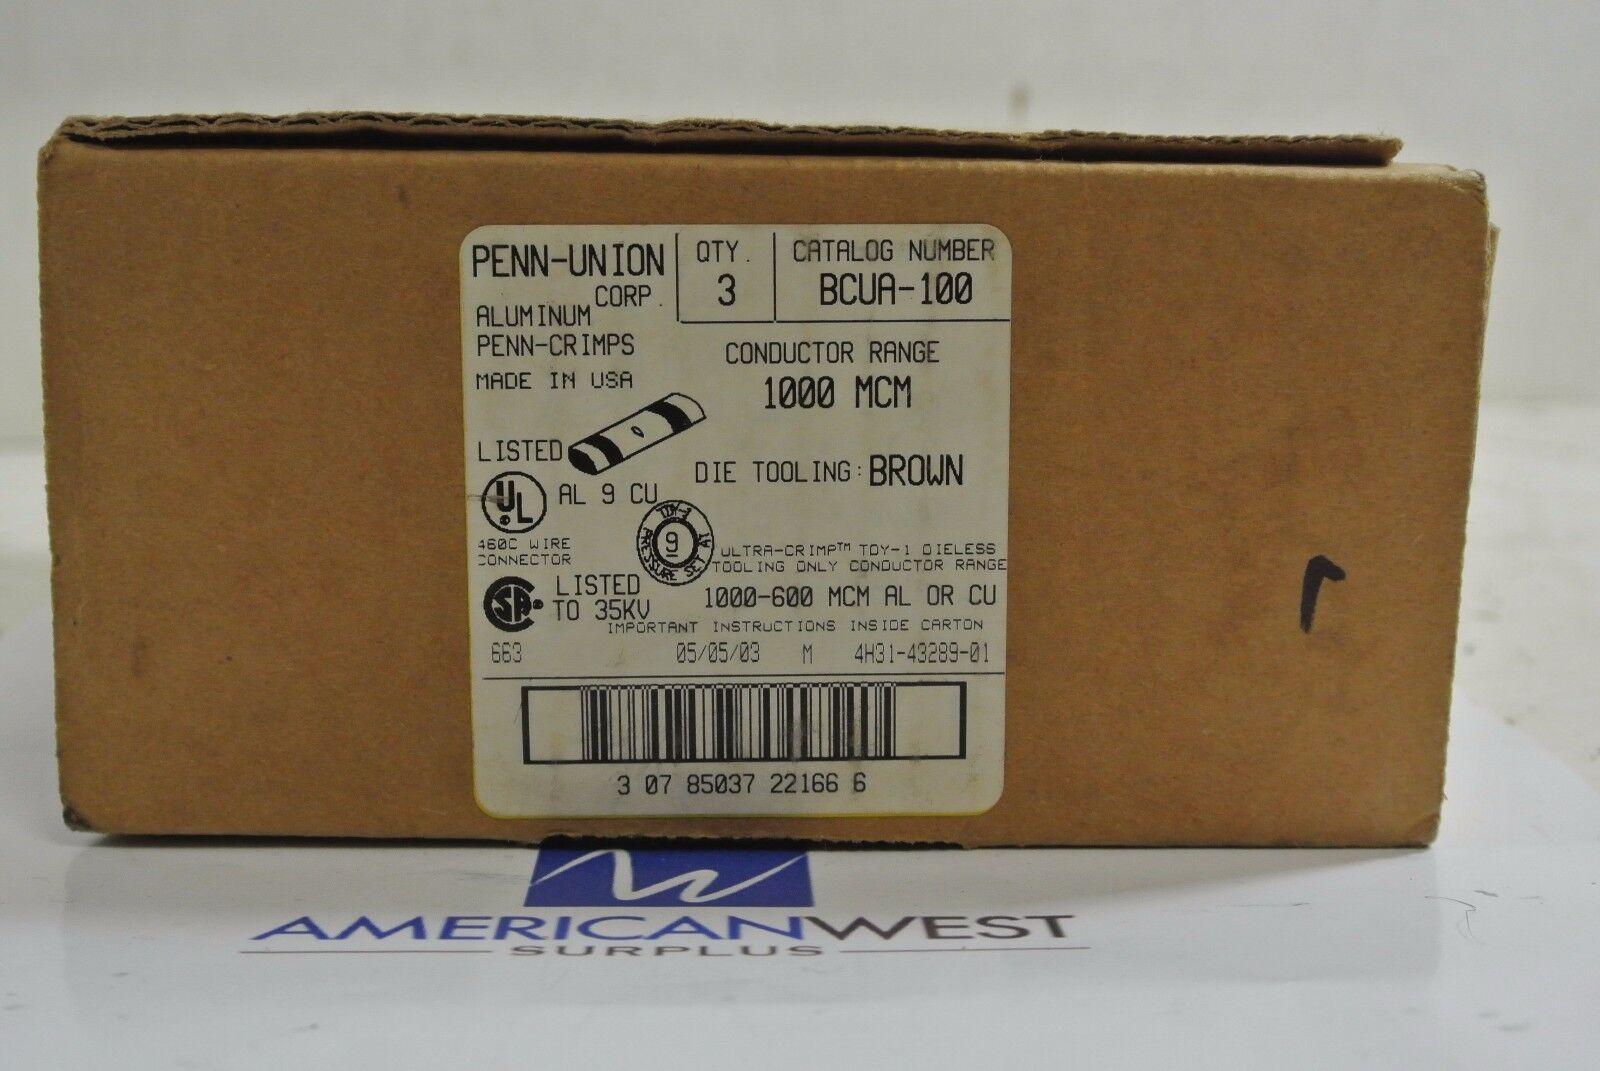 NIB Box of 3 Penn-Union BCUA-100 Aluminum Penn-Crimps 1000 MCM Conductor Range